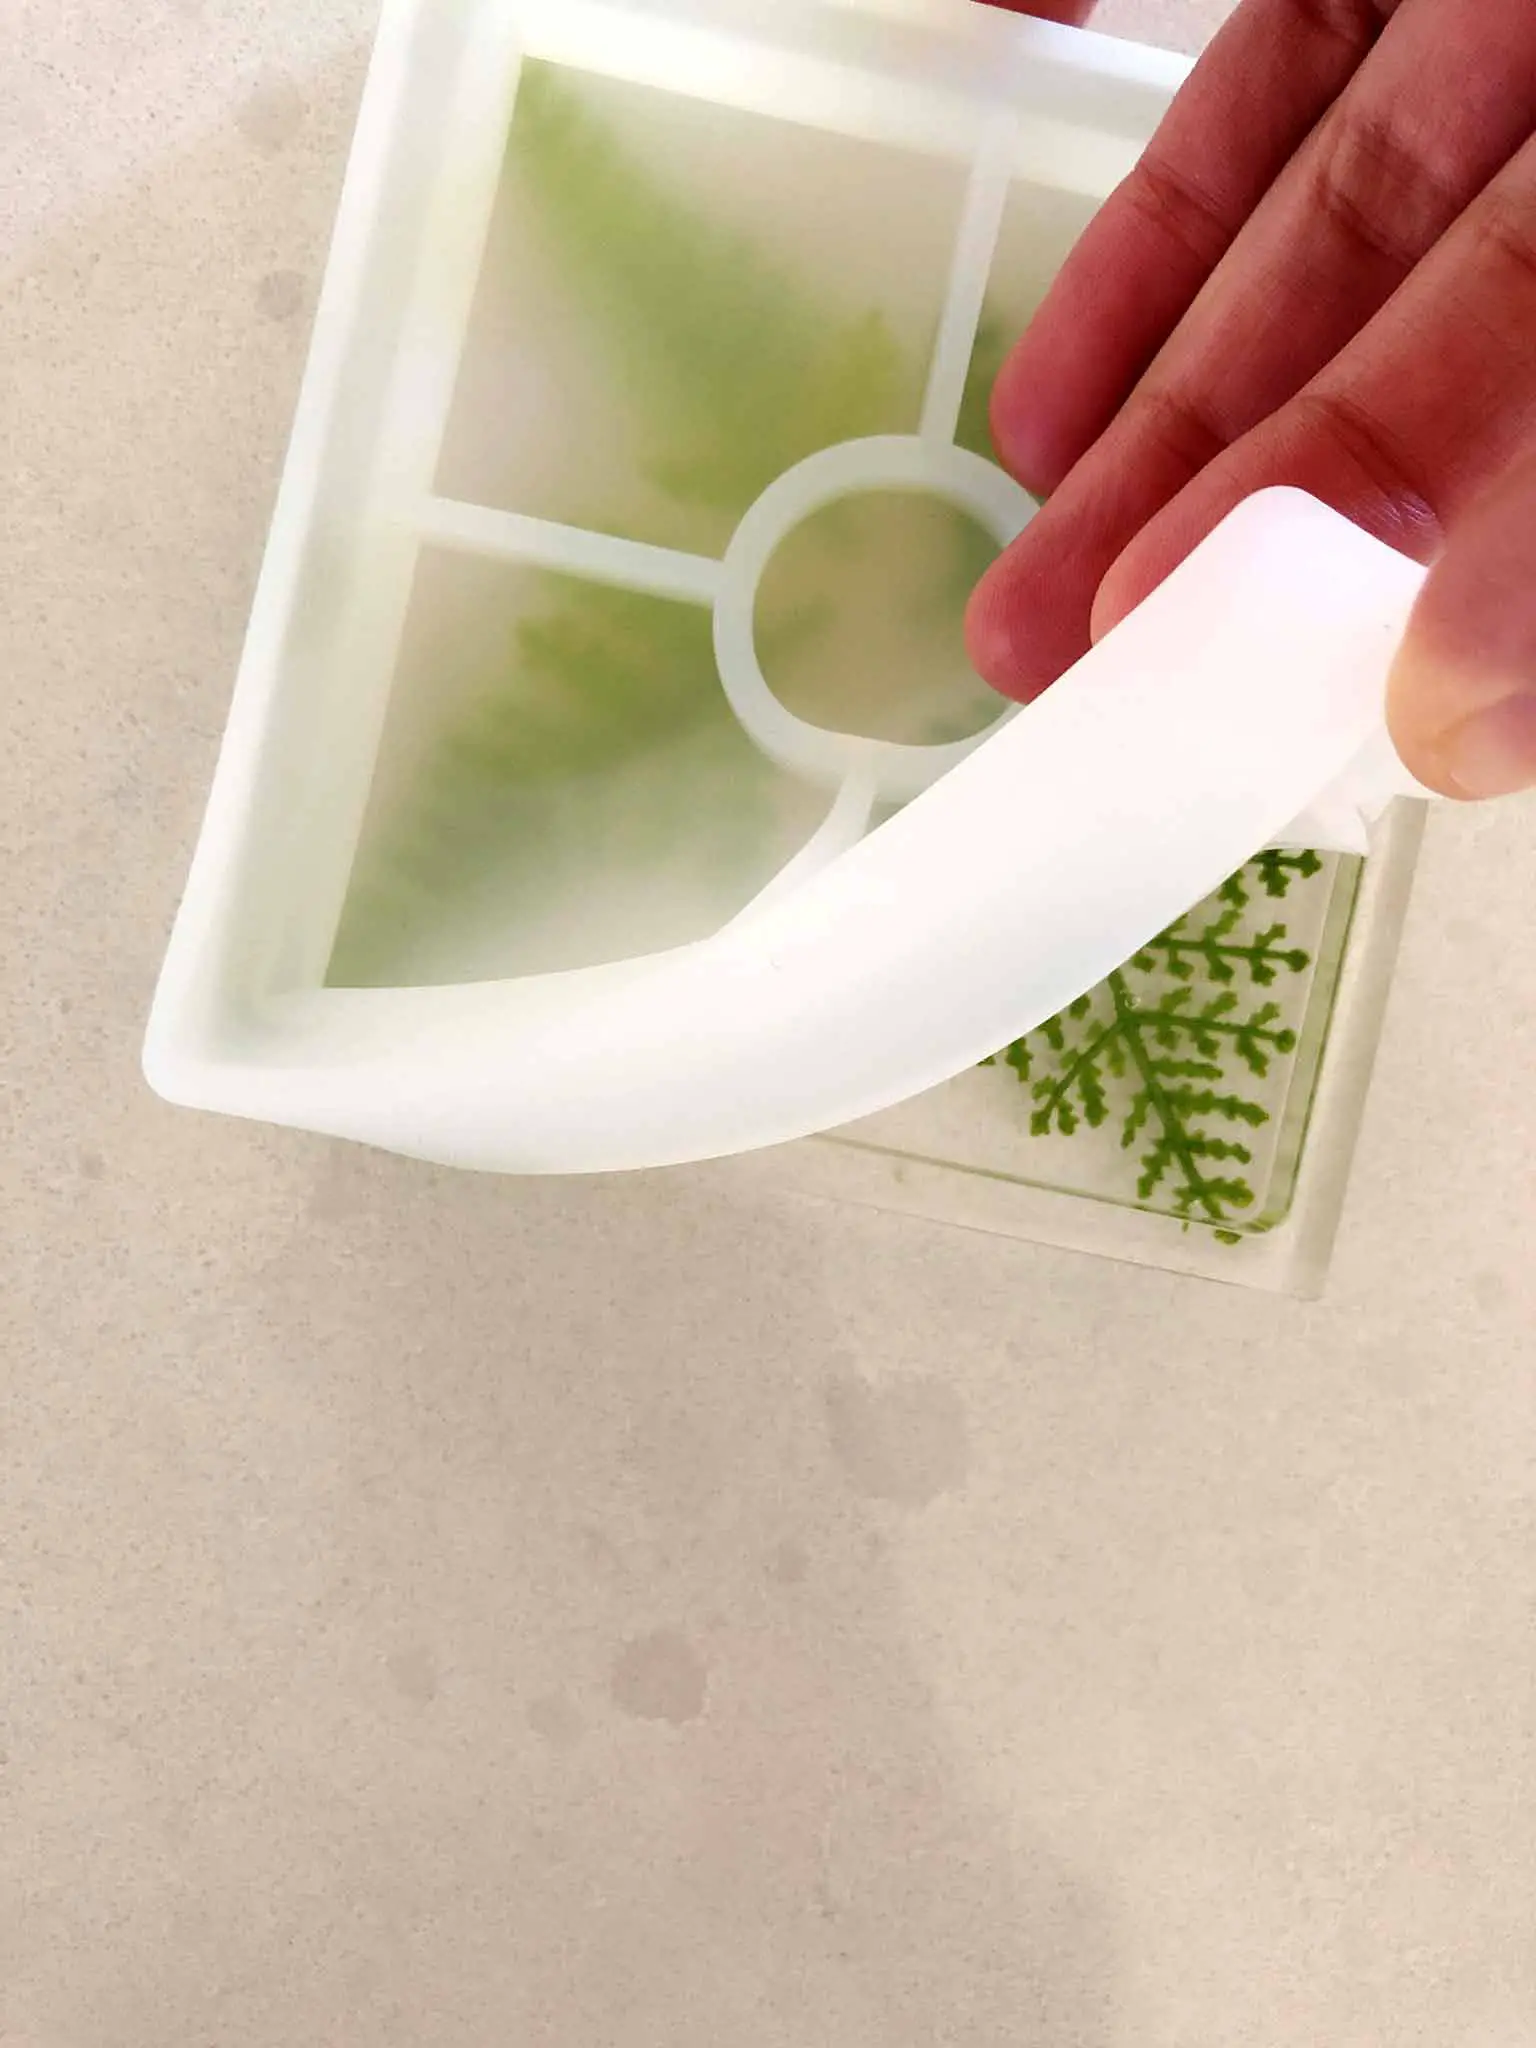 peeling silicone mold off resin coasters